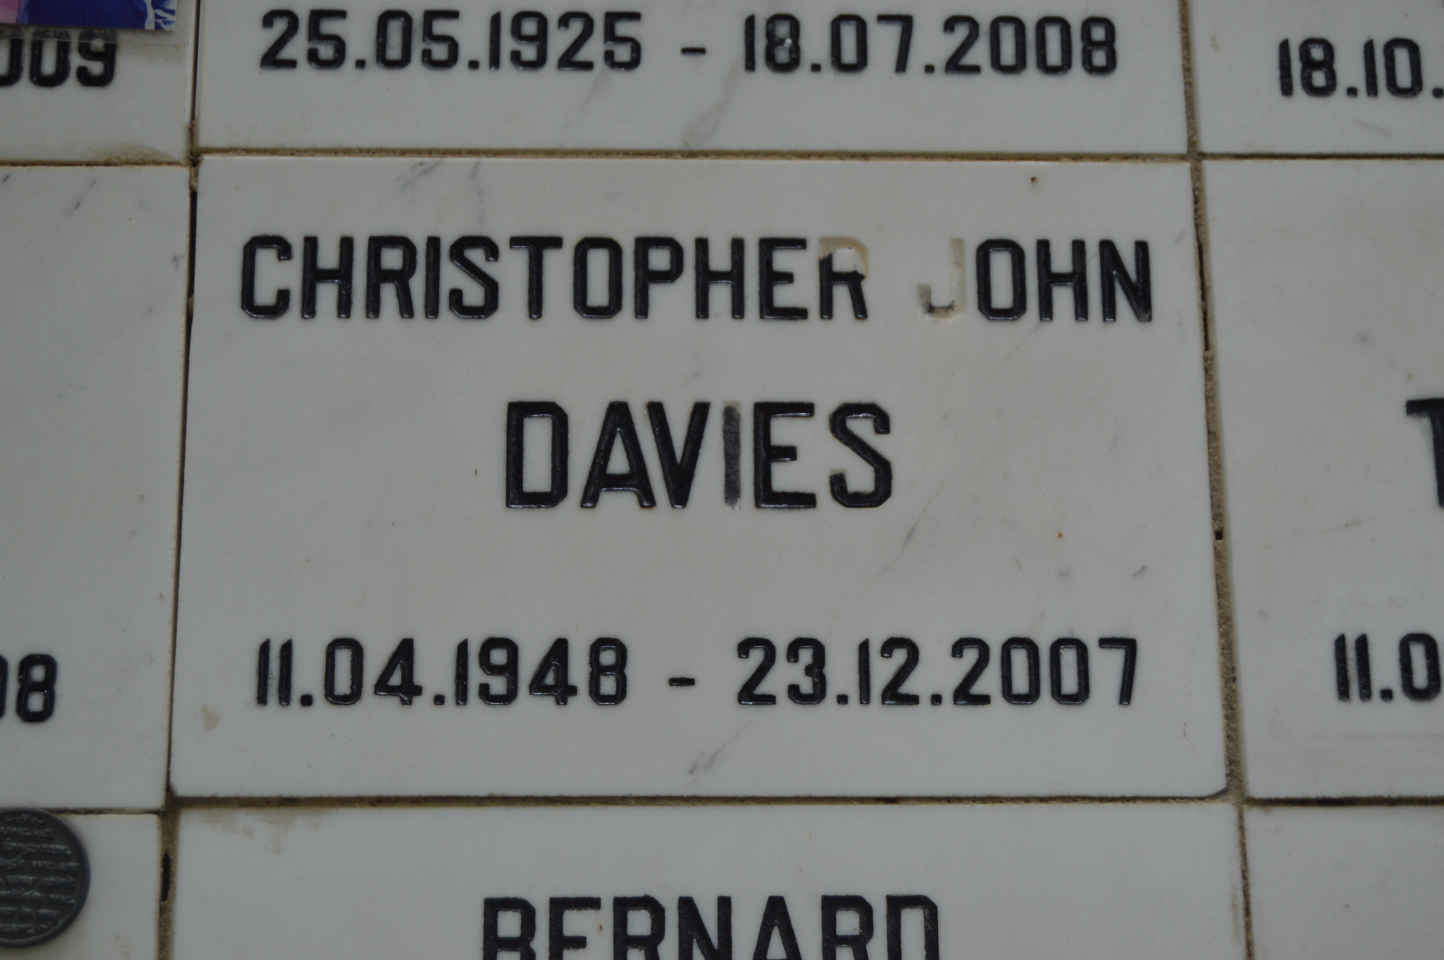 DAVIES Christopher John 1948-2007